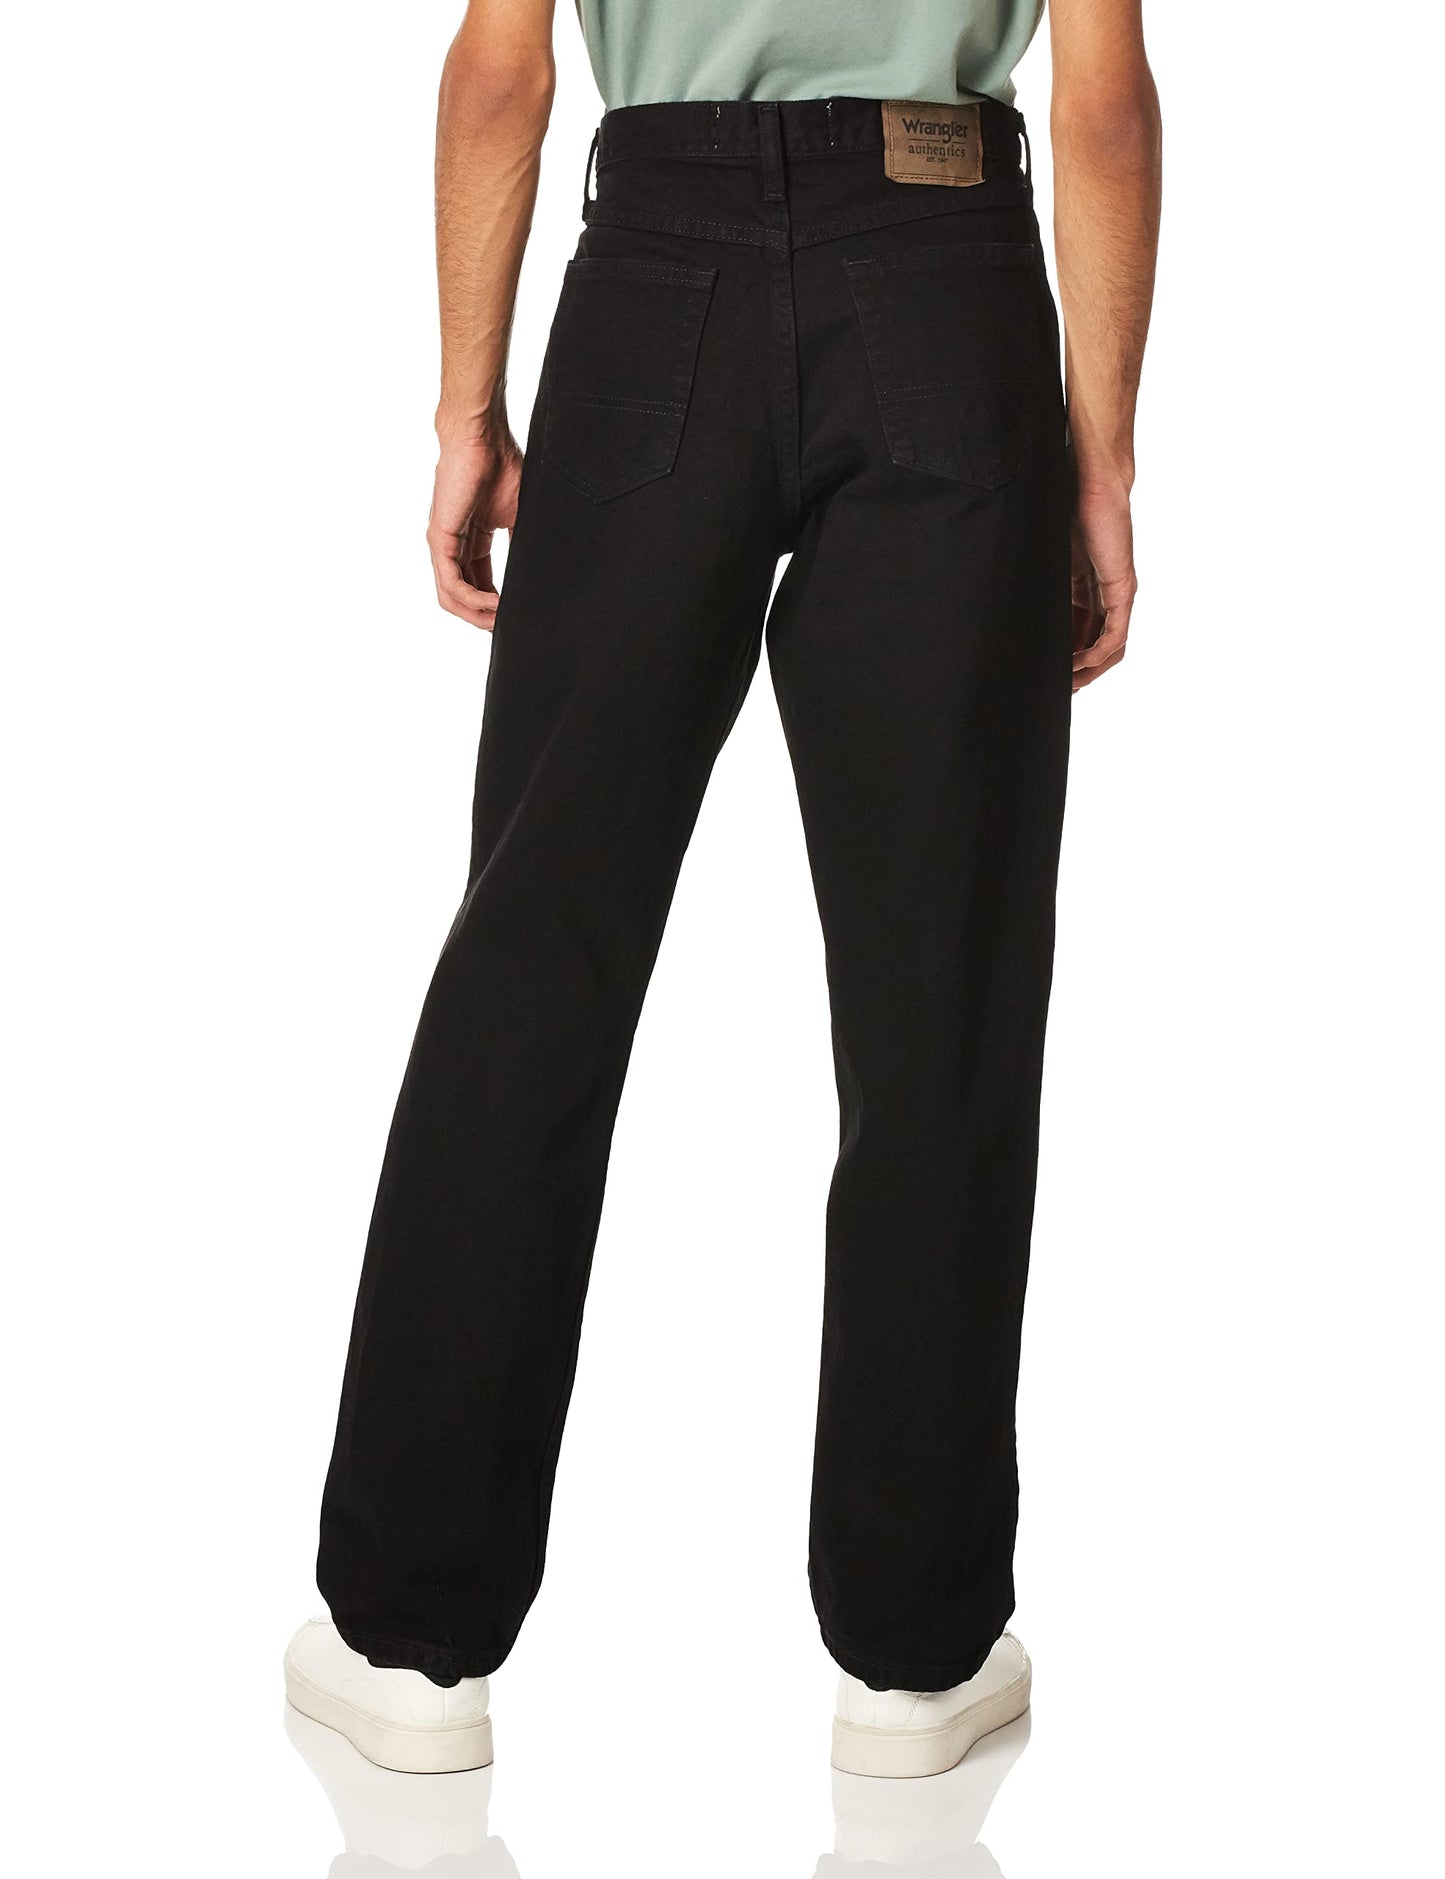 Wrangler Authentics Men's Classic 5-Pocket Relaxed Fit Cotton Jean, Black, 40W x 34L